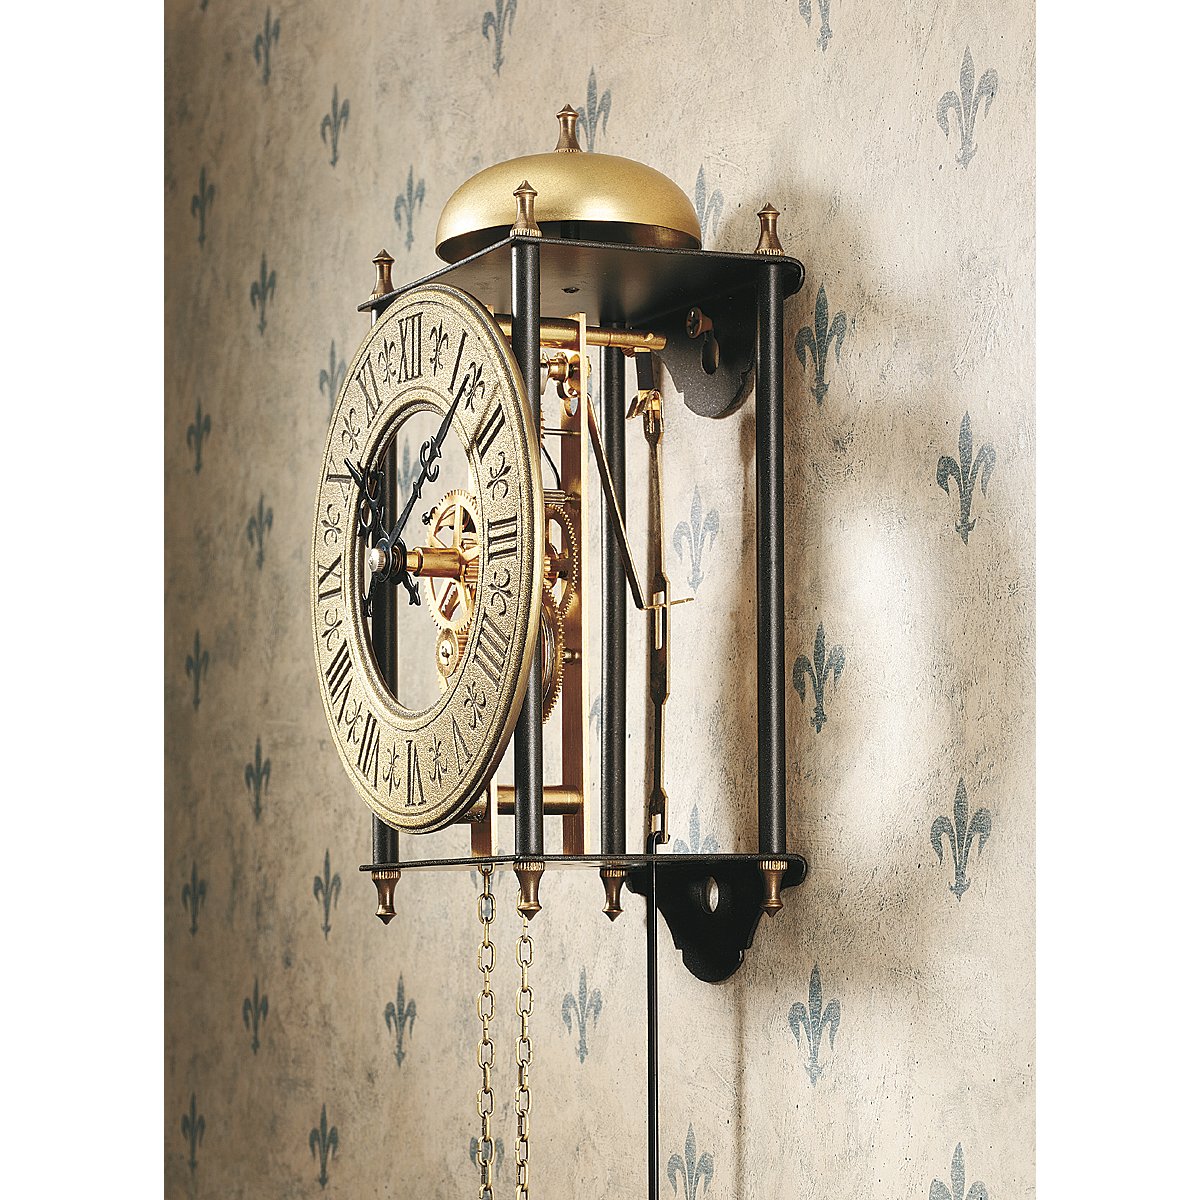 Design Toscano The Templeton Regulator Wall Clock